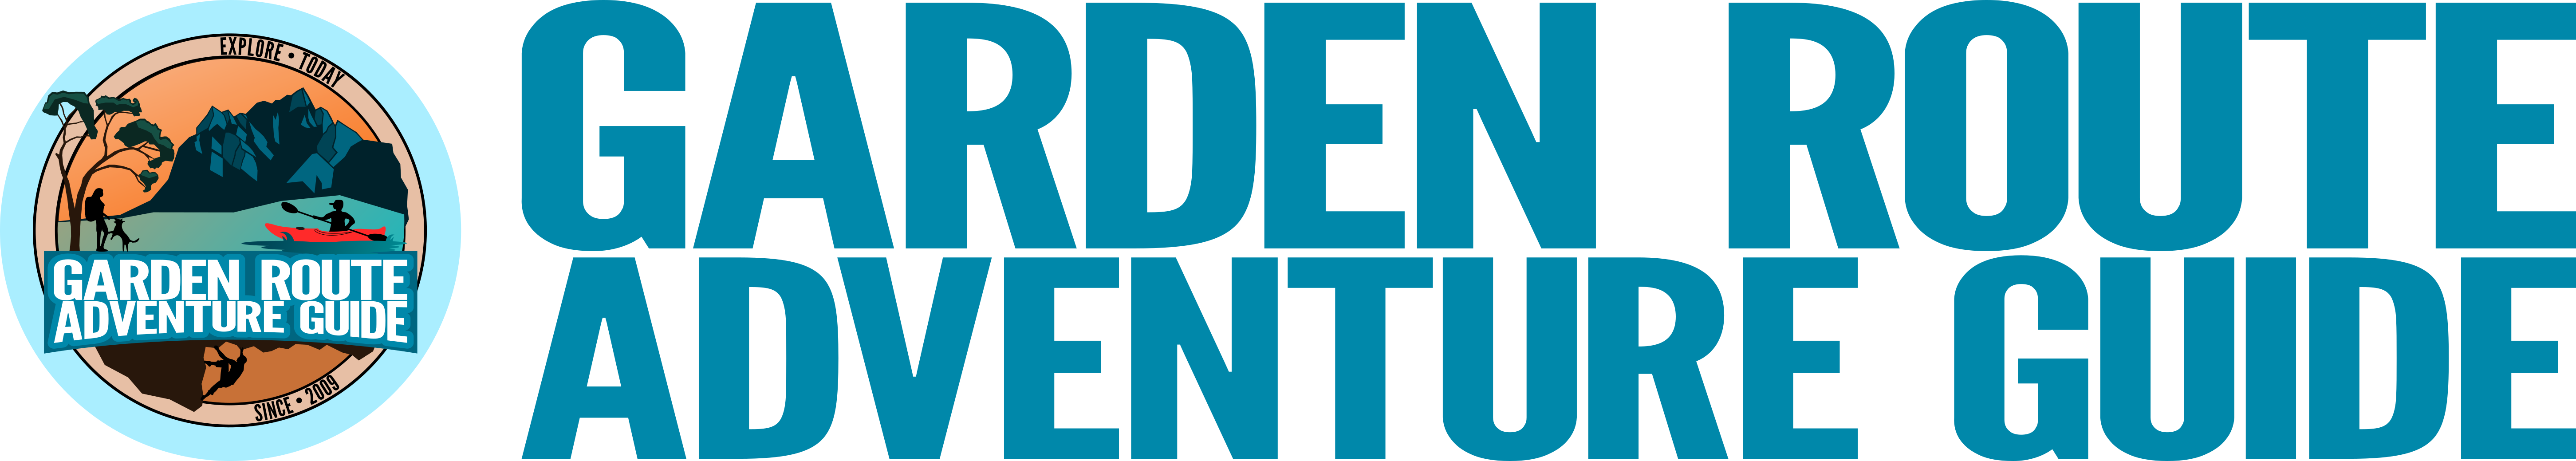 Garden Route Adventure Guide Website Logo Blue